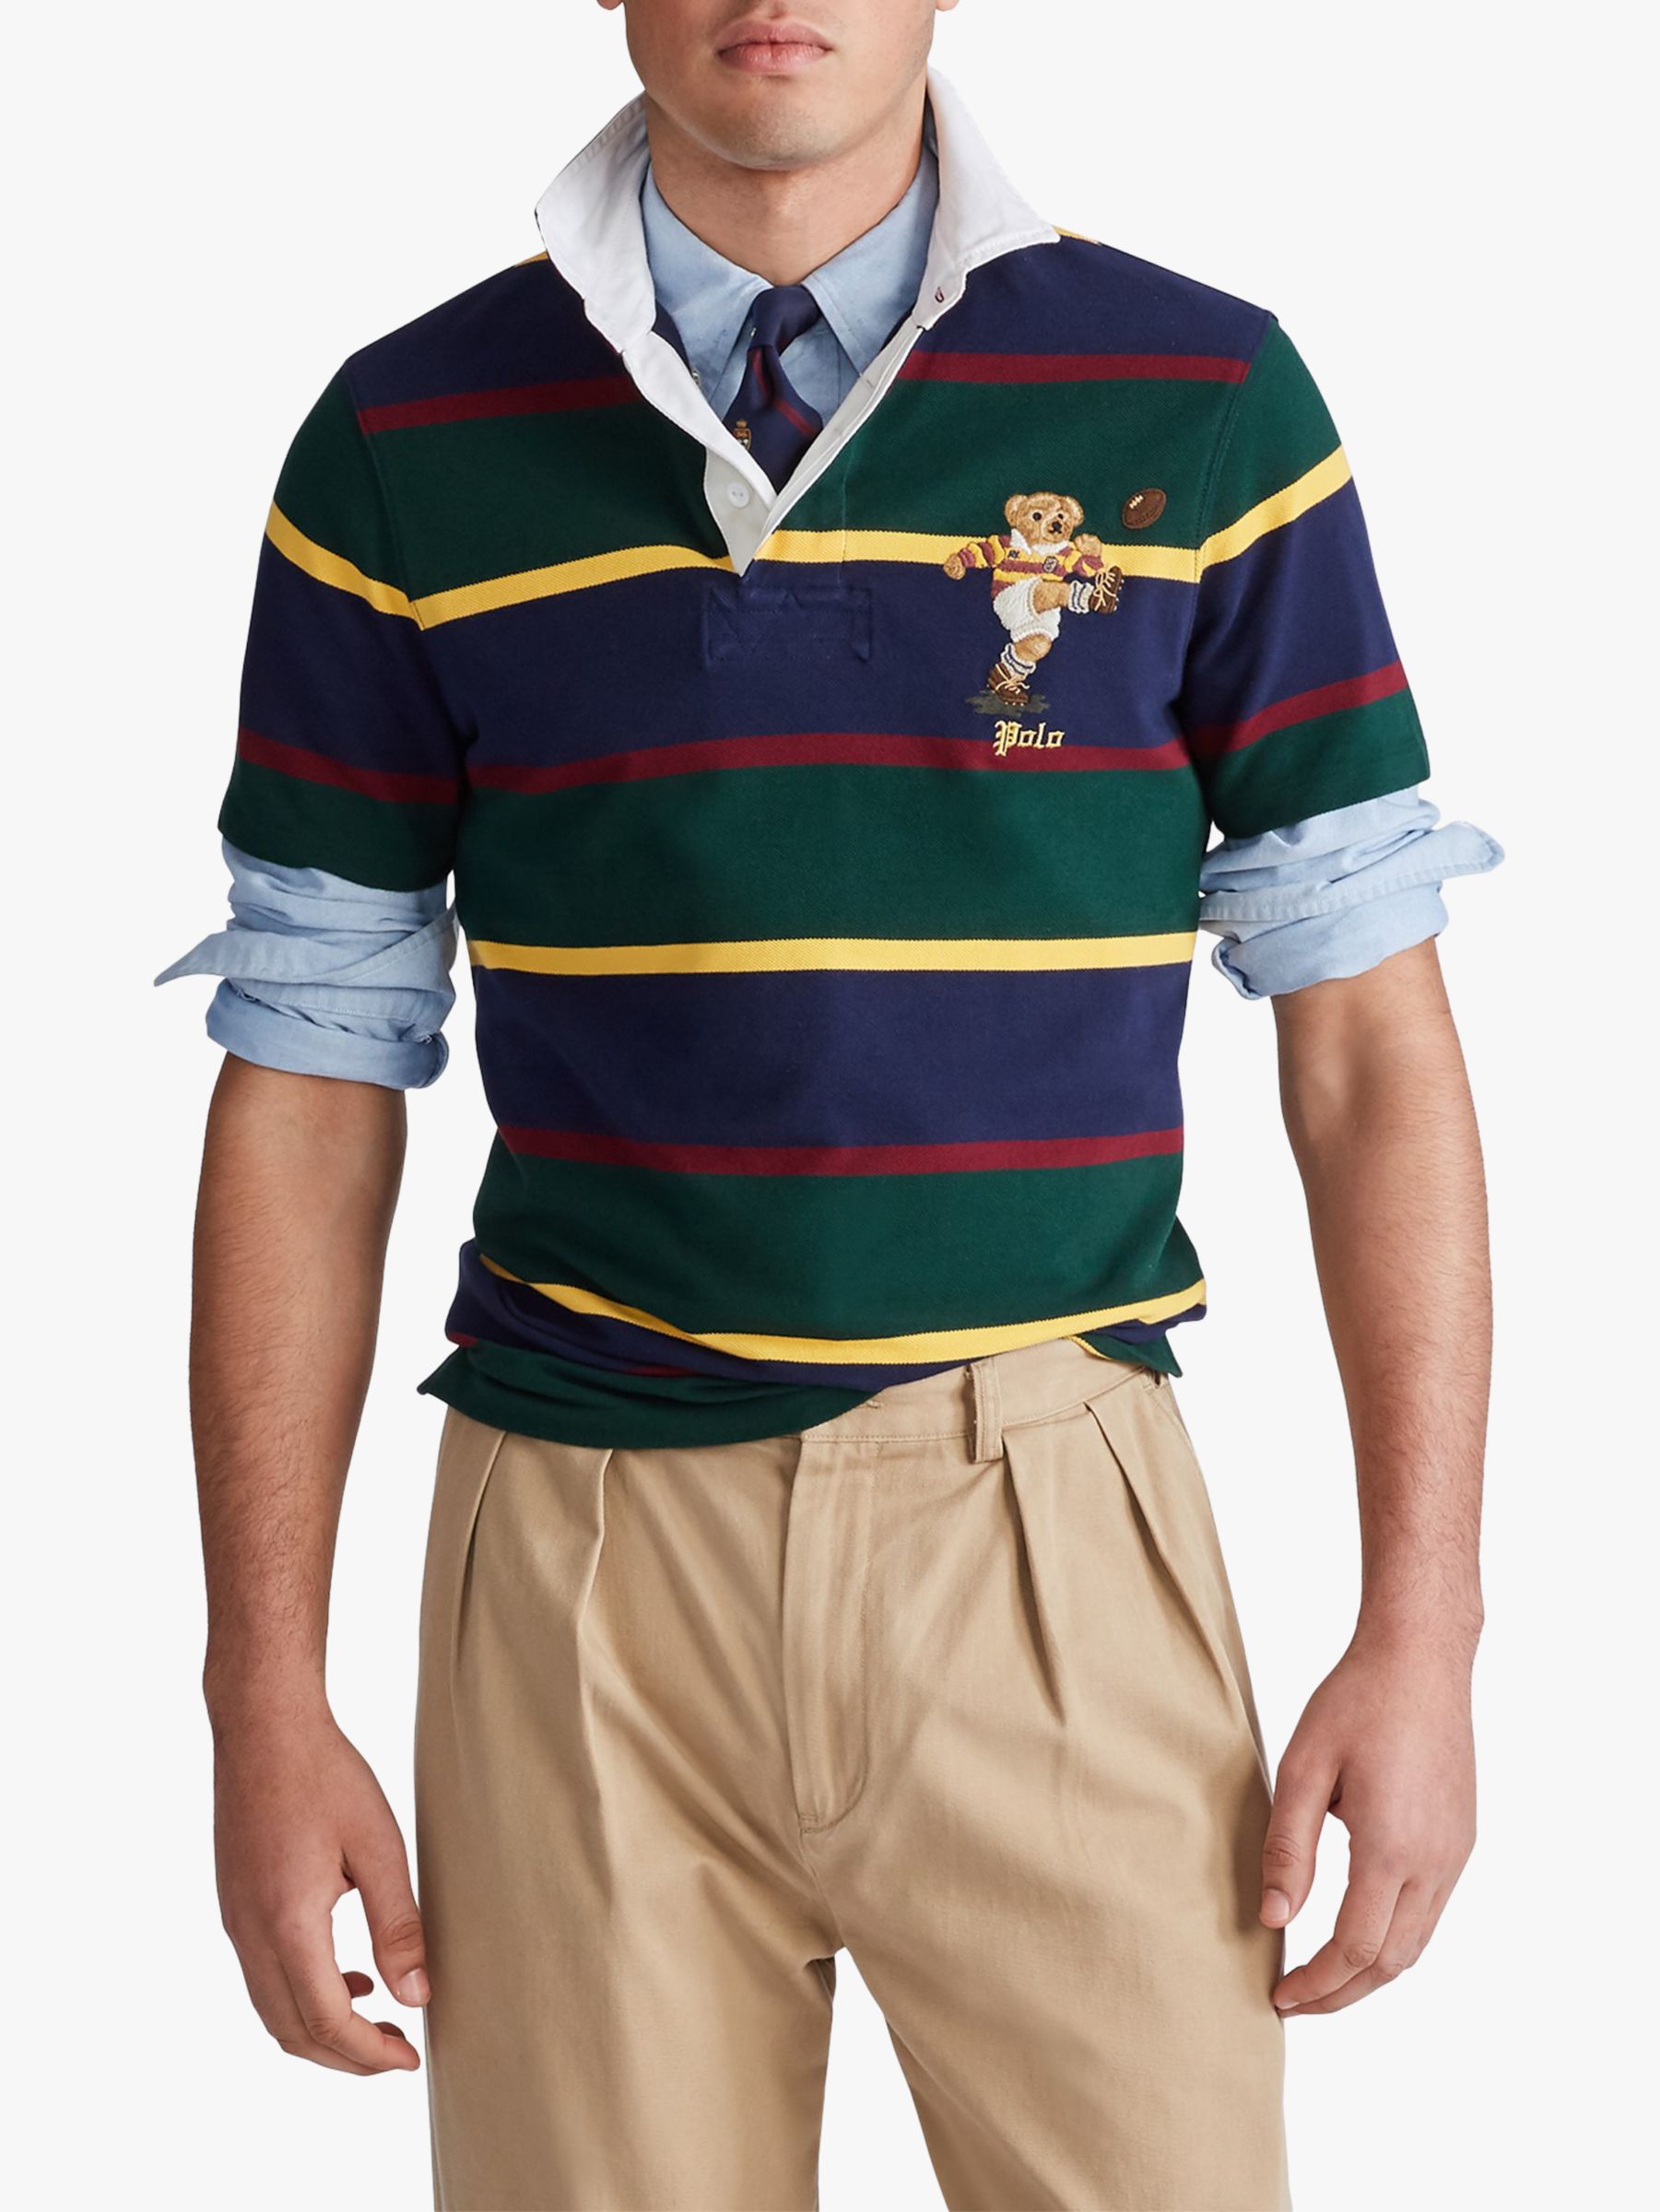 Polo Ralph Lauren Stripe Rugby Bear Polo Shirt, College Green Multi